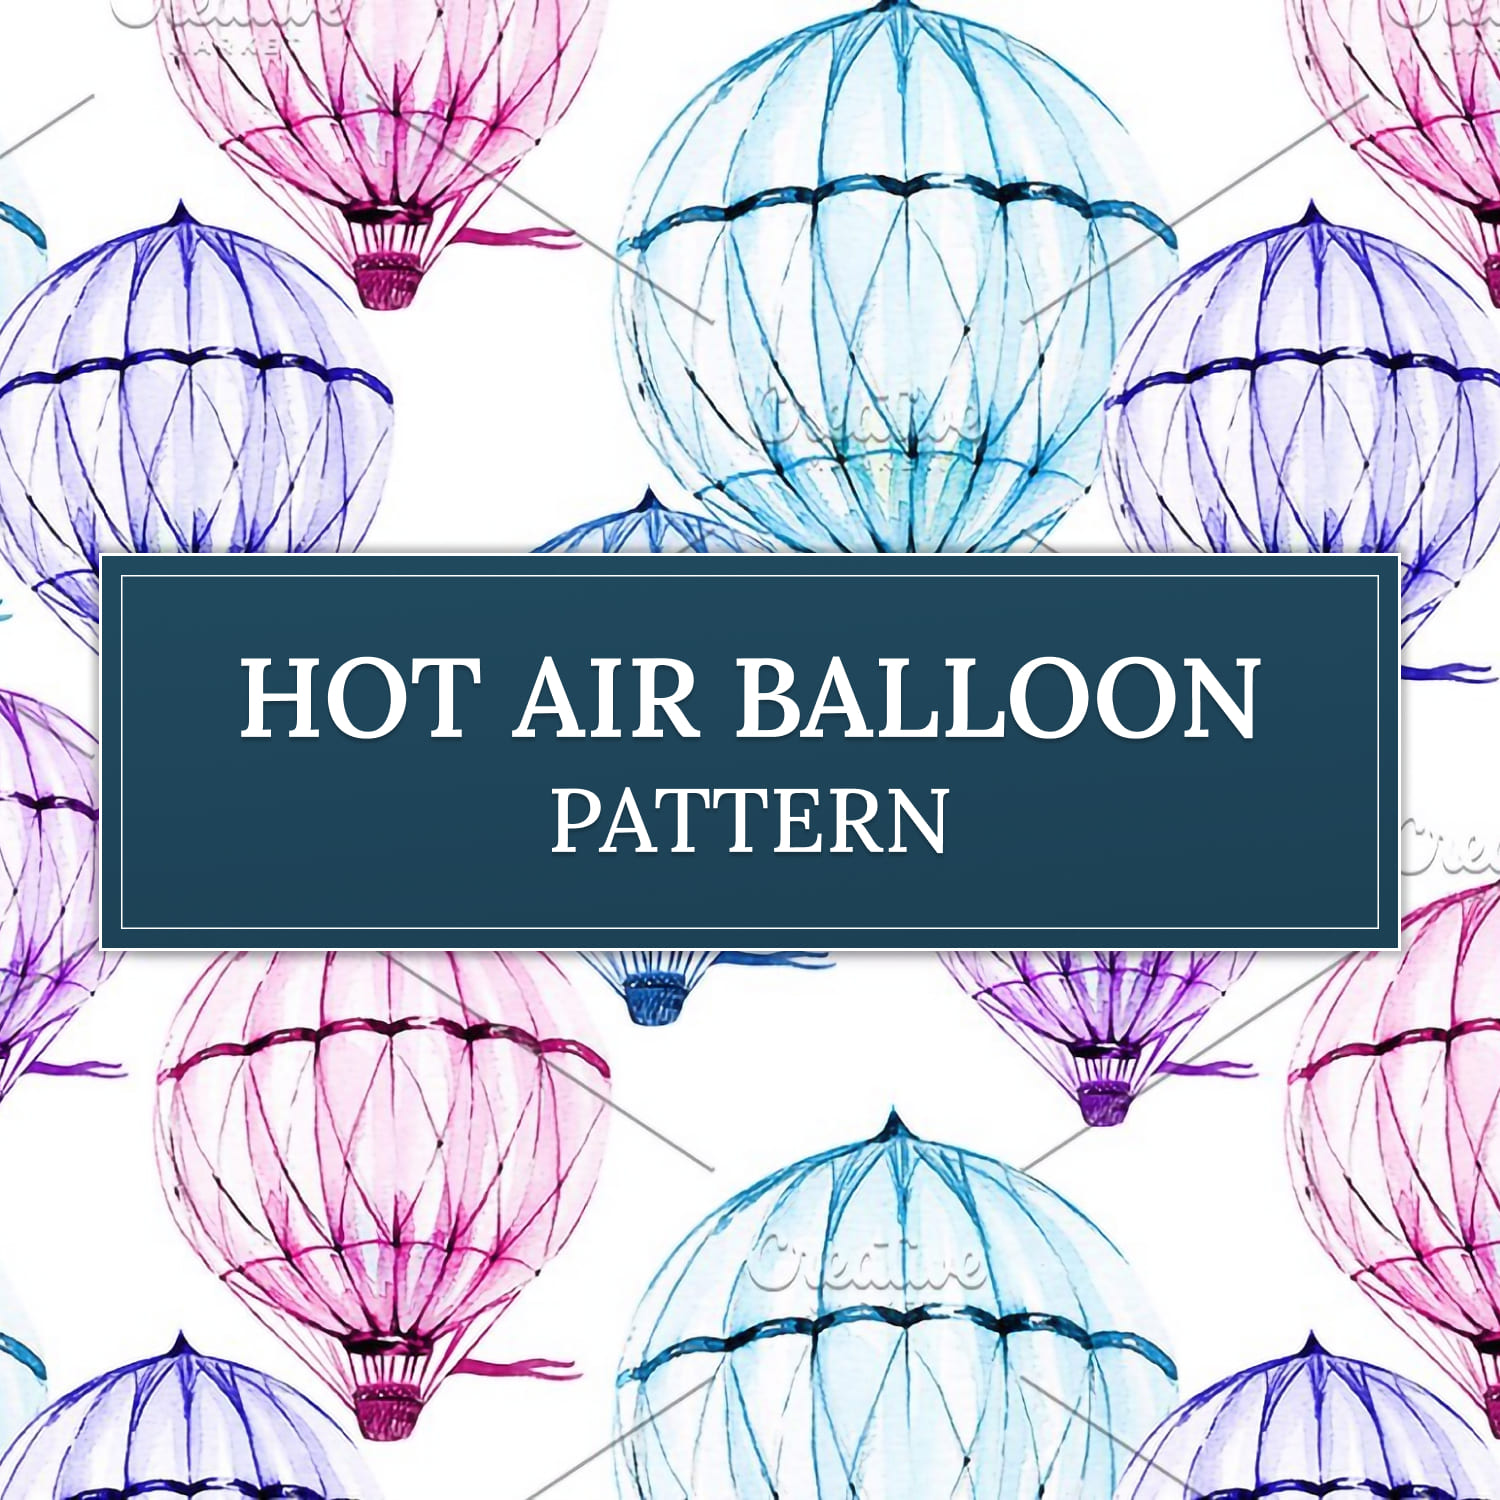 Hot air balloon pattern.